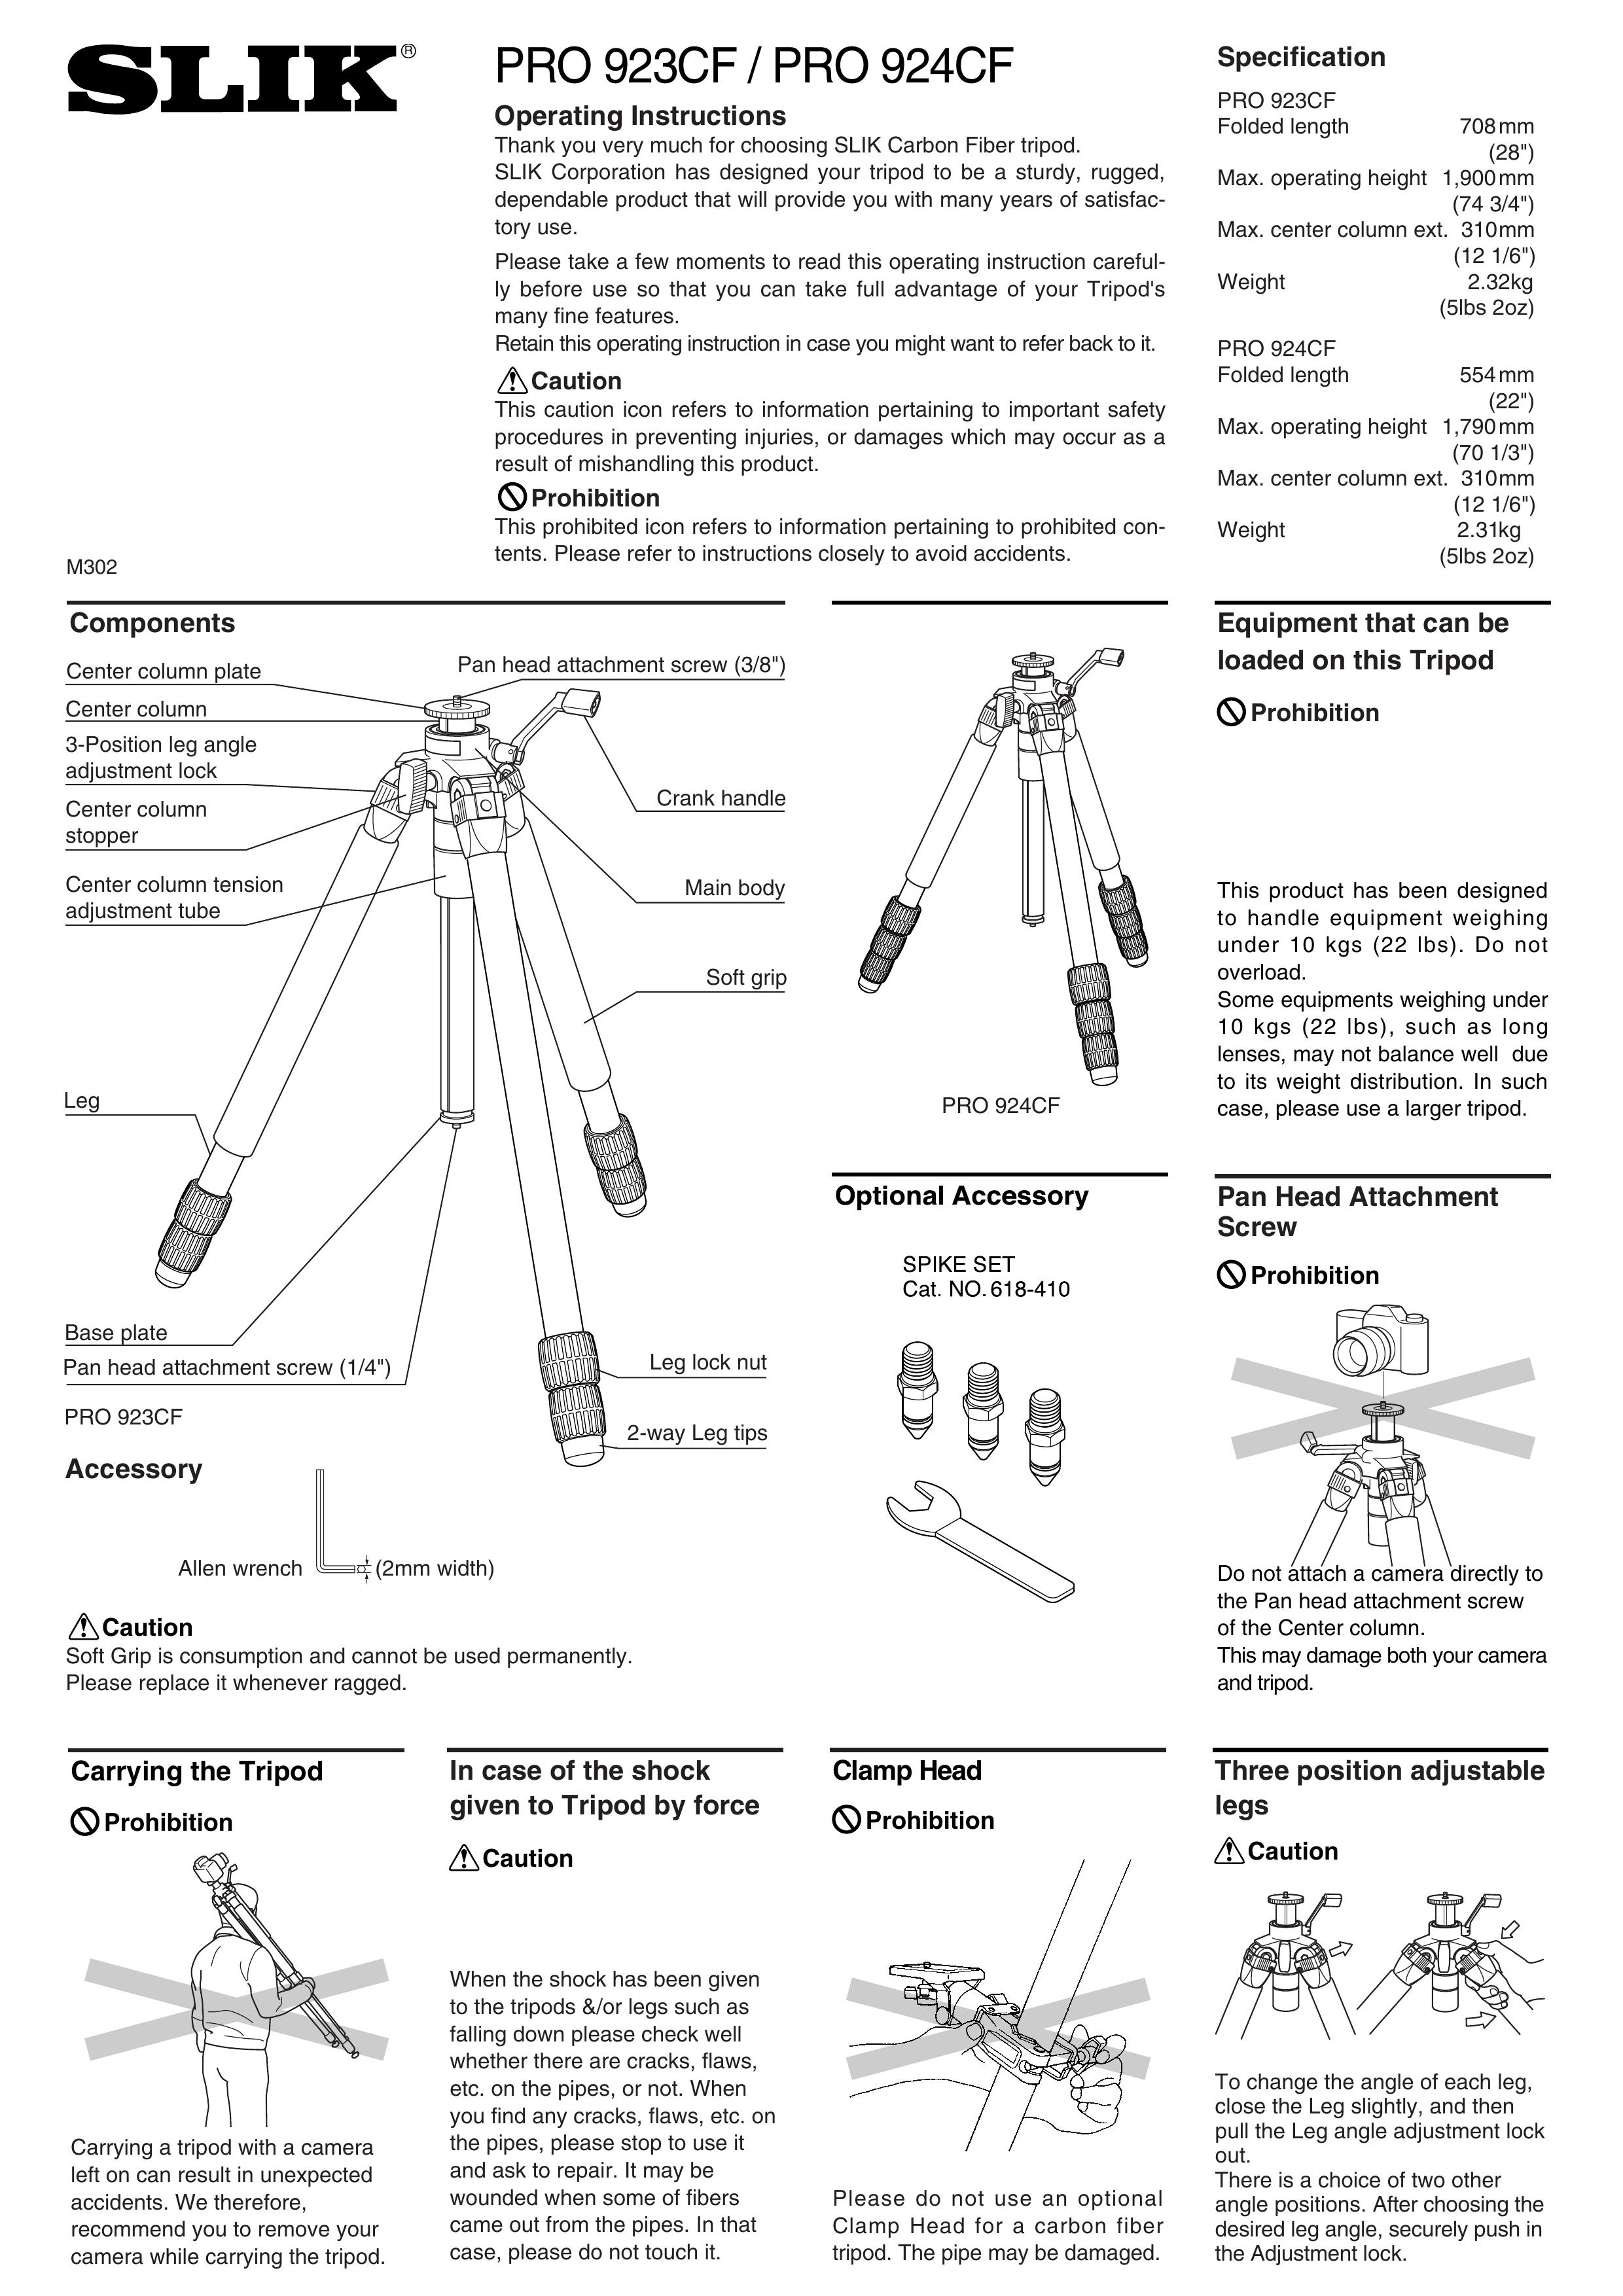 SLIK PRO 923CF Camera Accessories User Manual